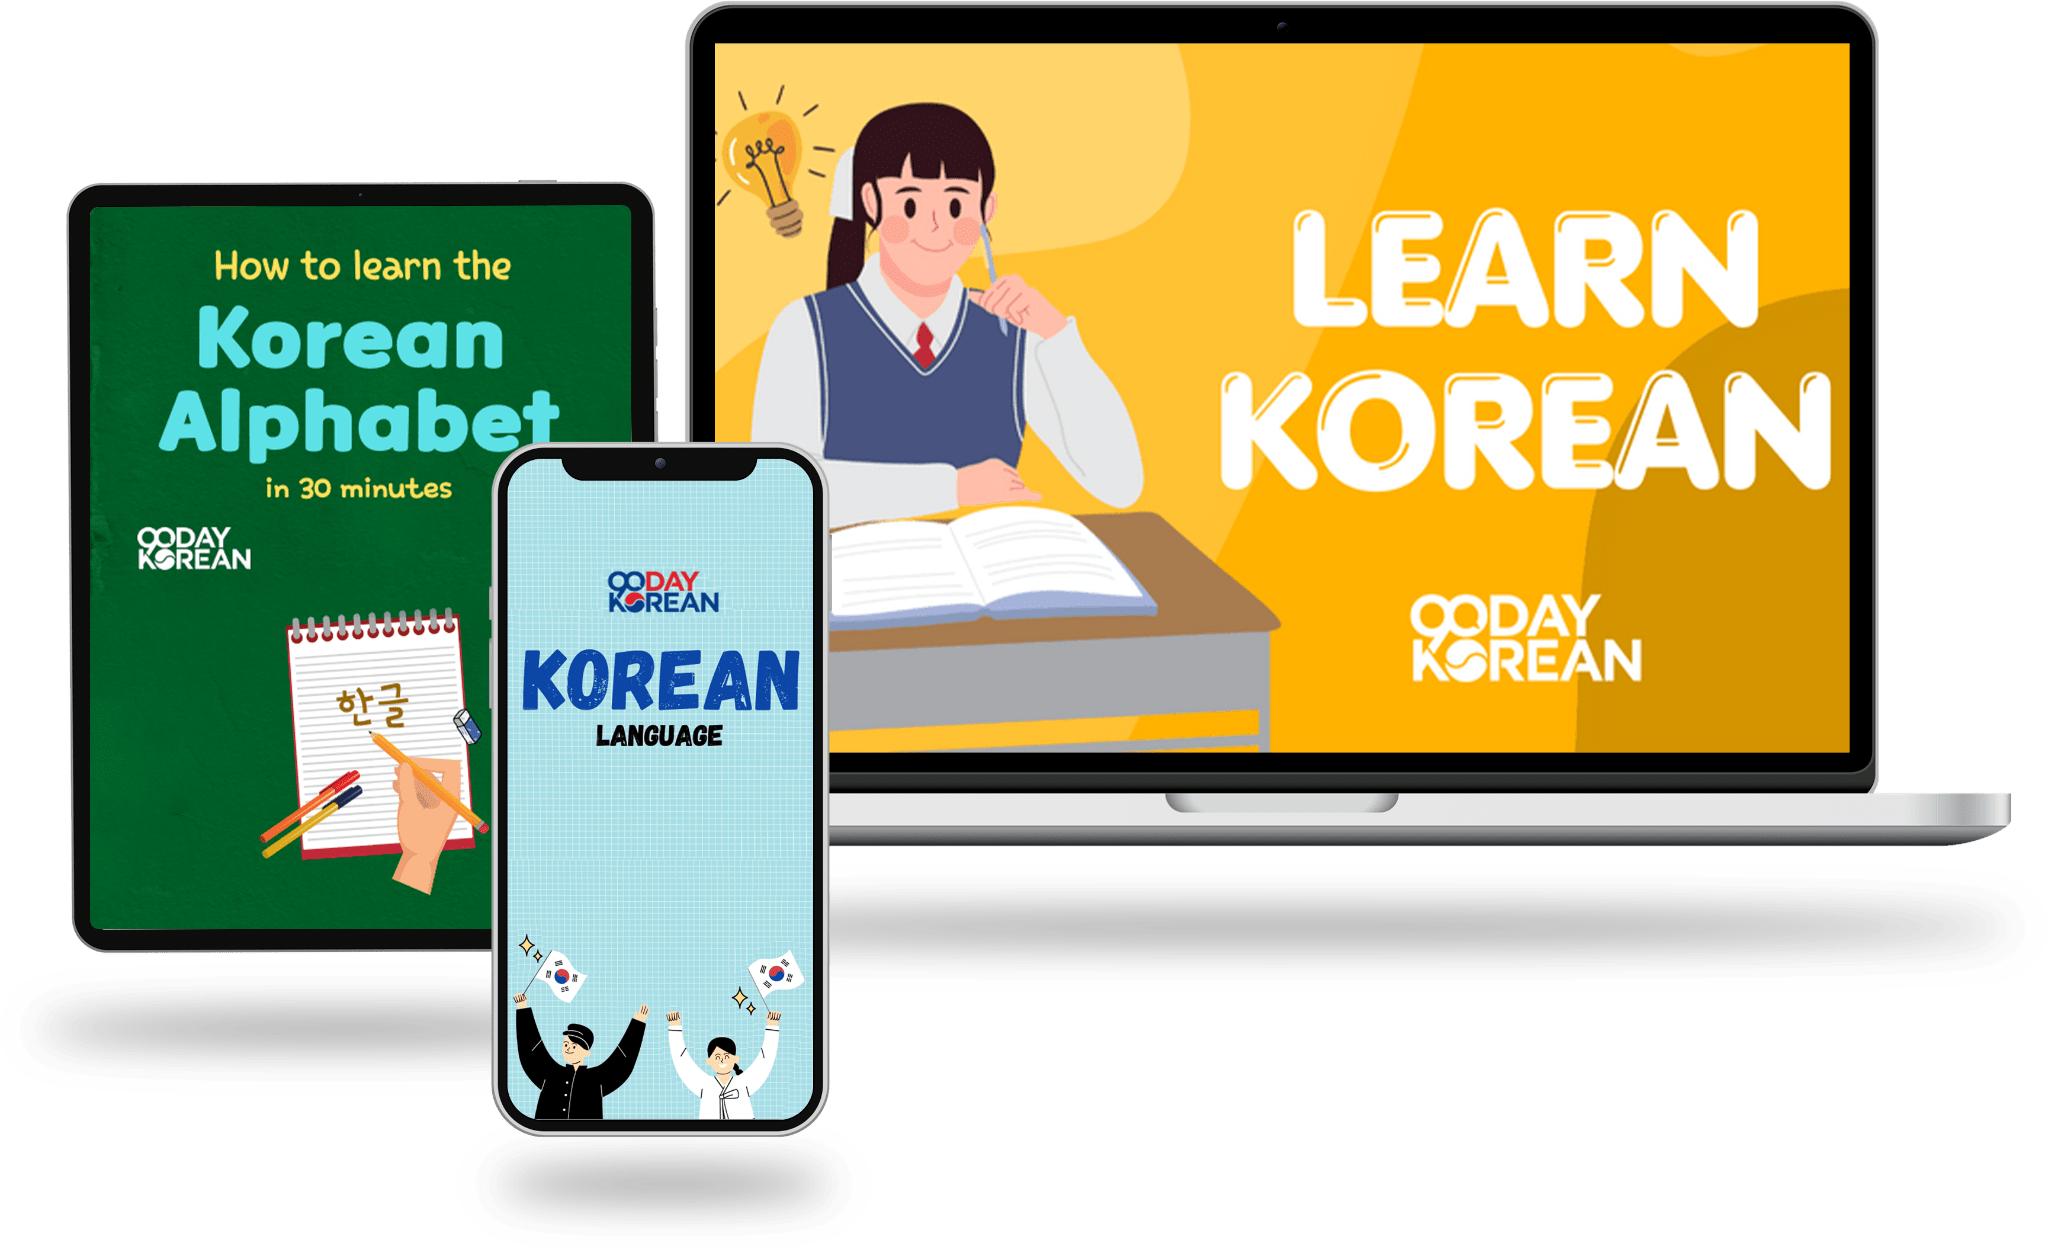 Three devices with 90 Day Korean logo